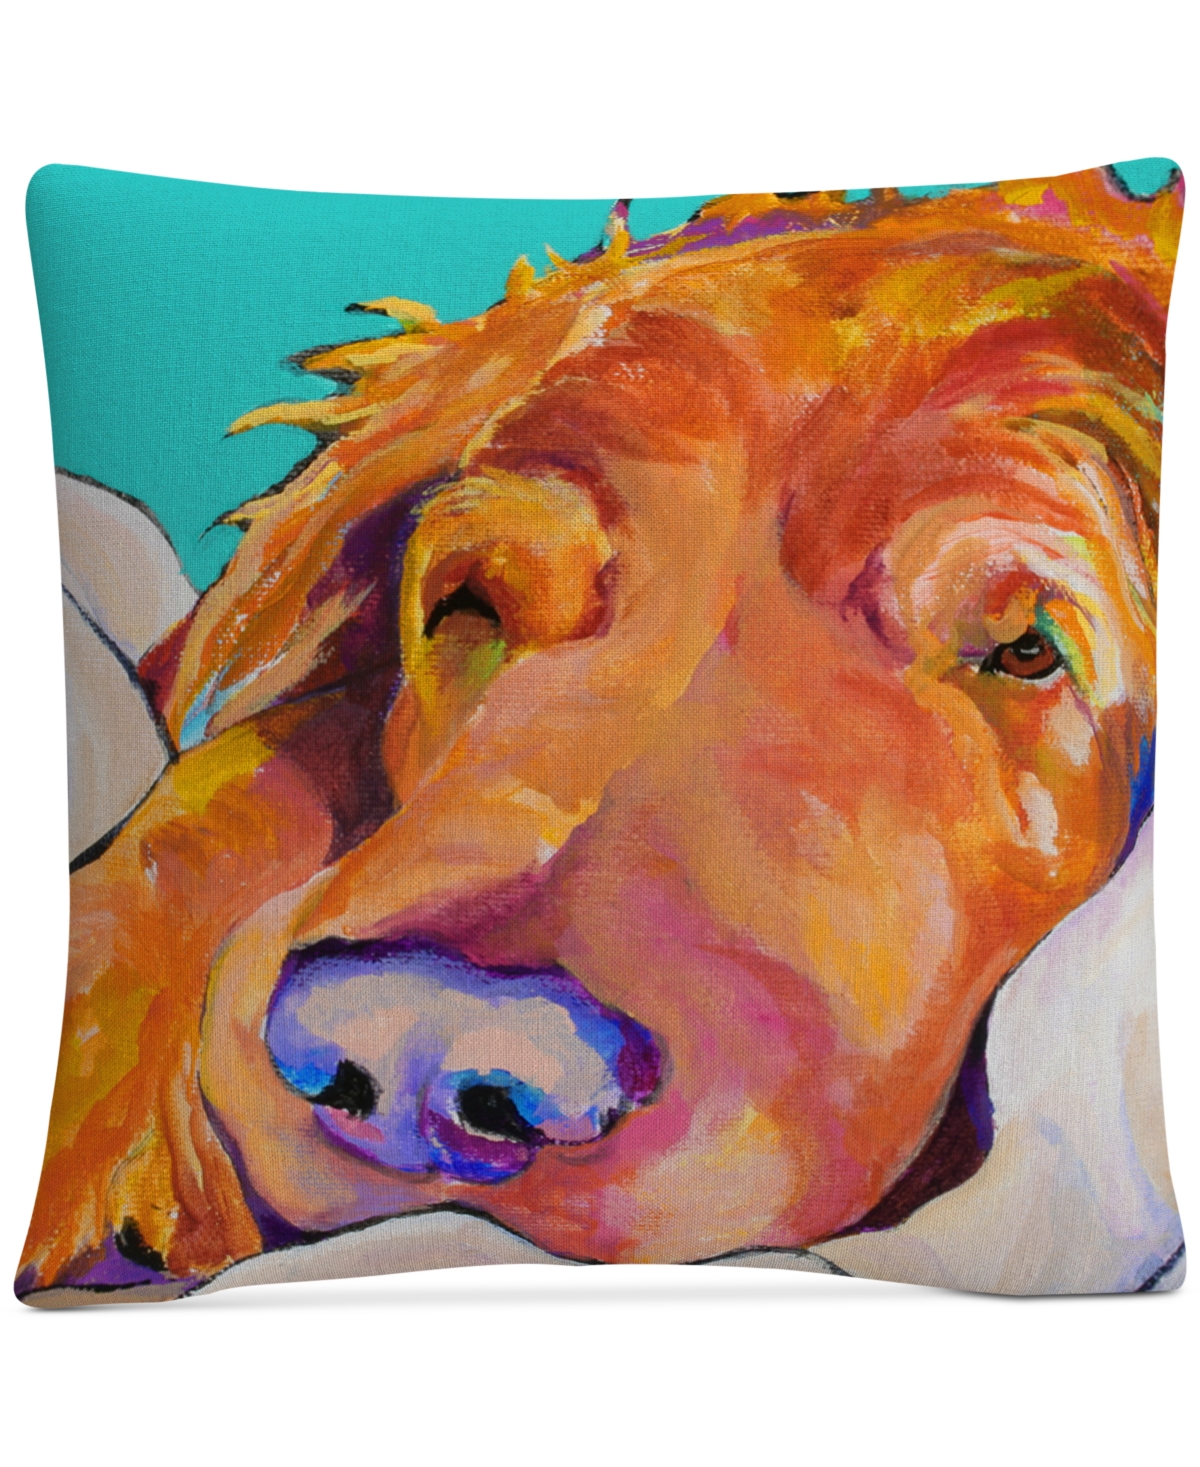 Pat Saunders-White Snoozer King Decorative Pillow, 16 x 16